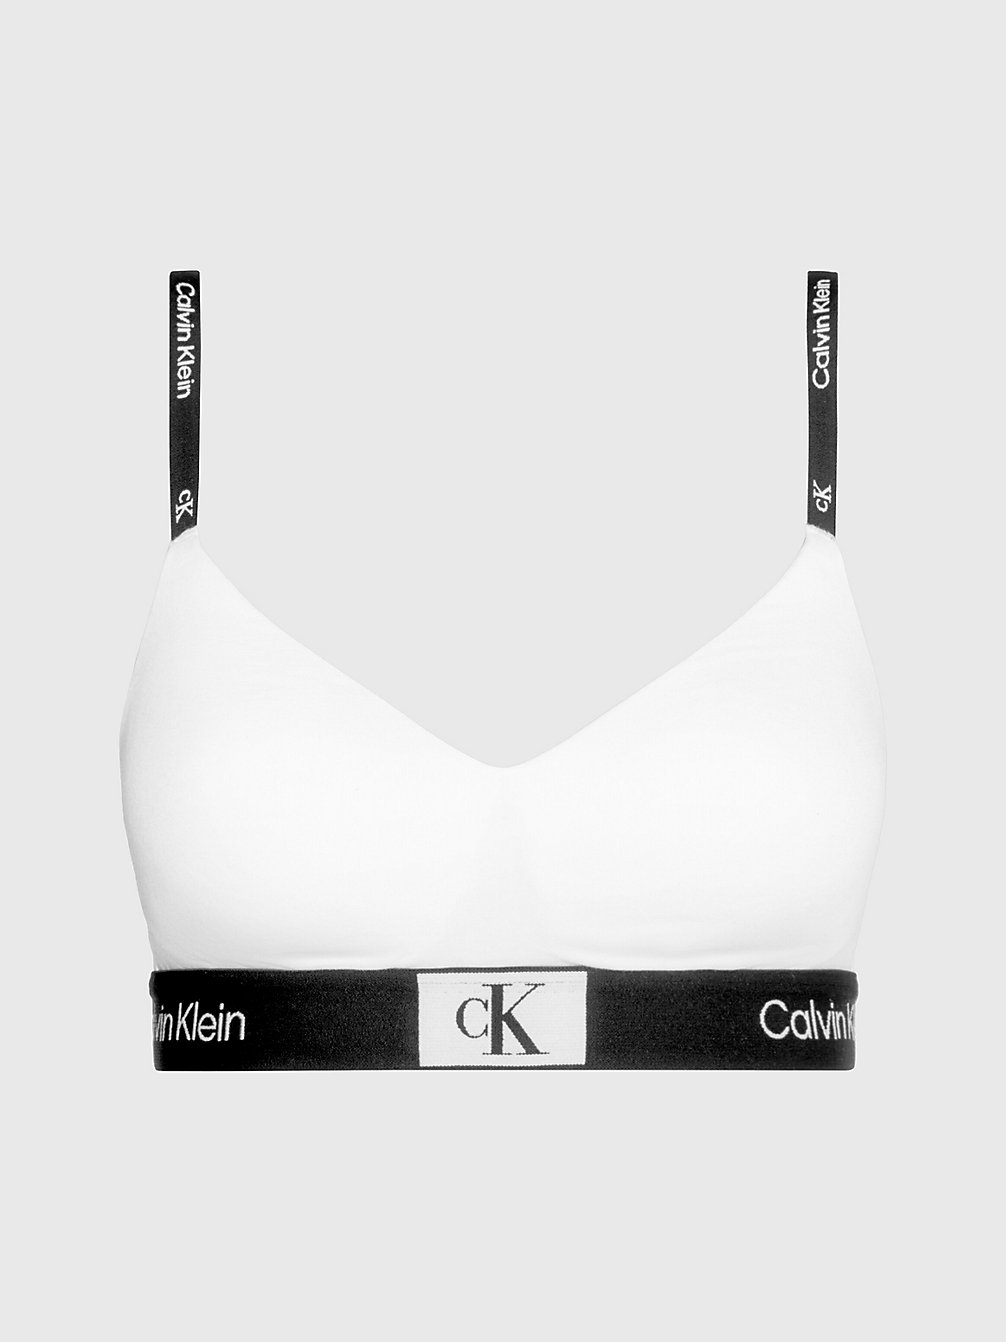 Brassière Sottile - Ck96 > WHITE > undefined donna > Calvin Klein